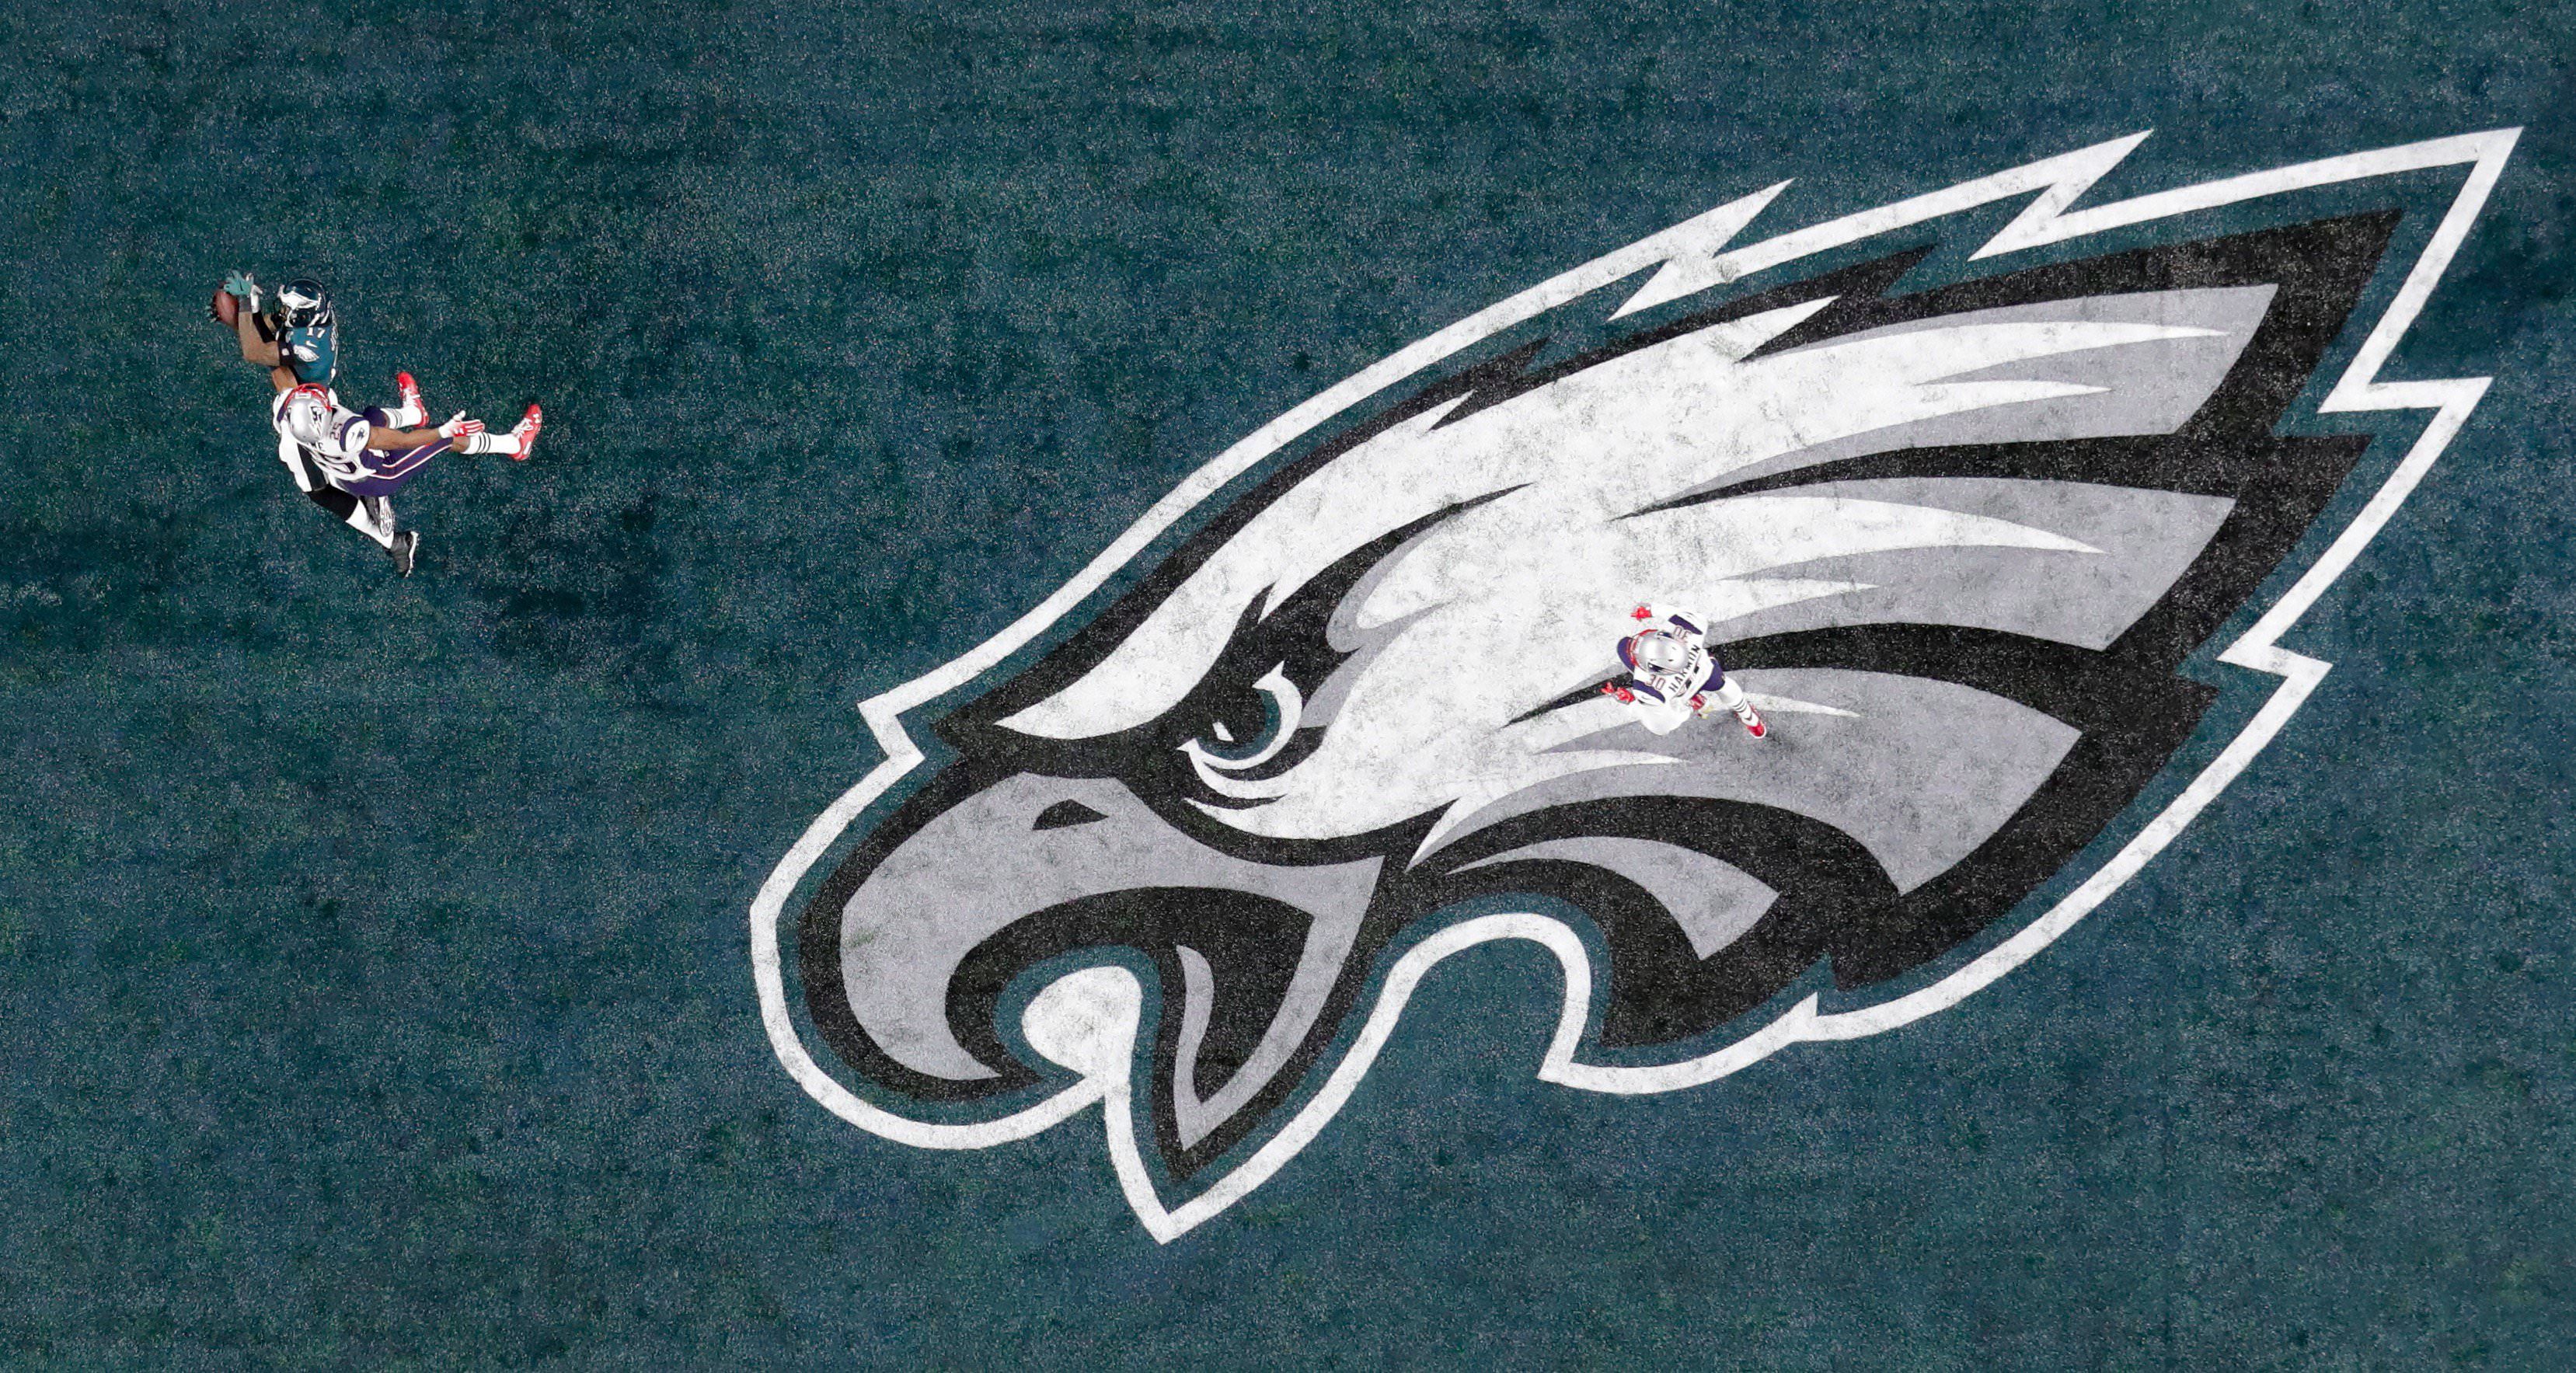 Philadelphia Eagles Desktop Wallpapers